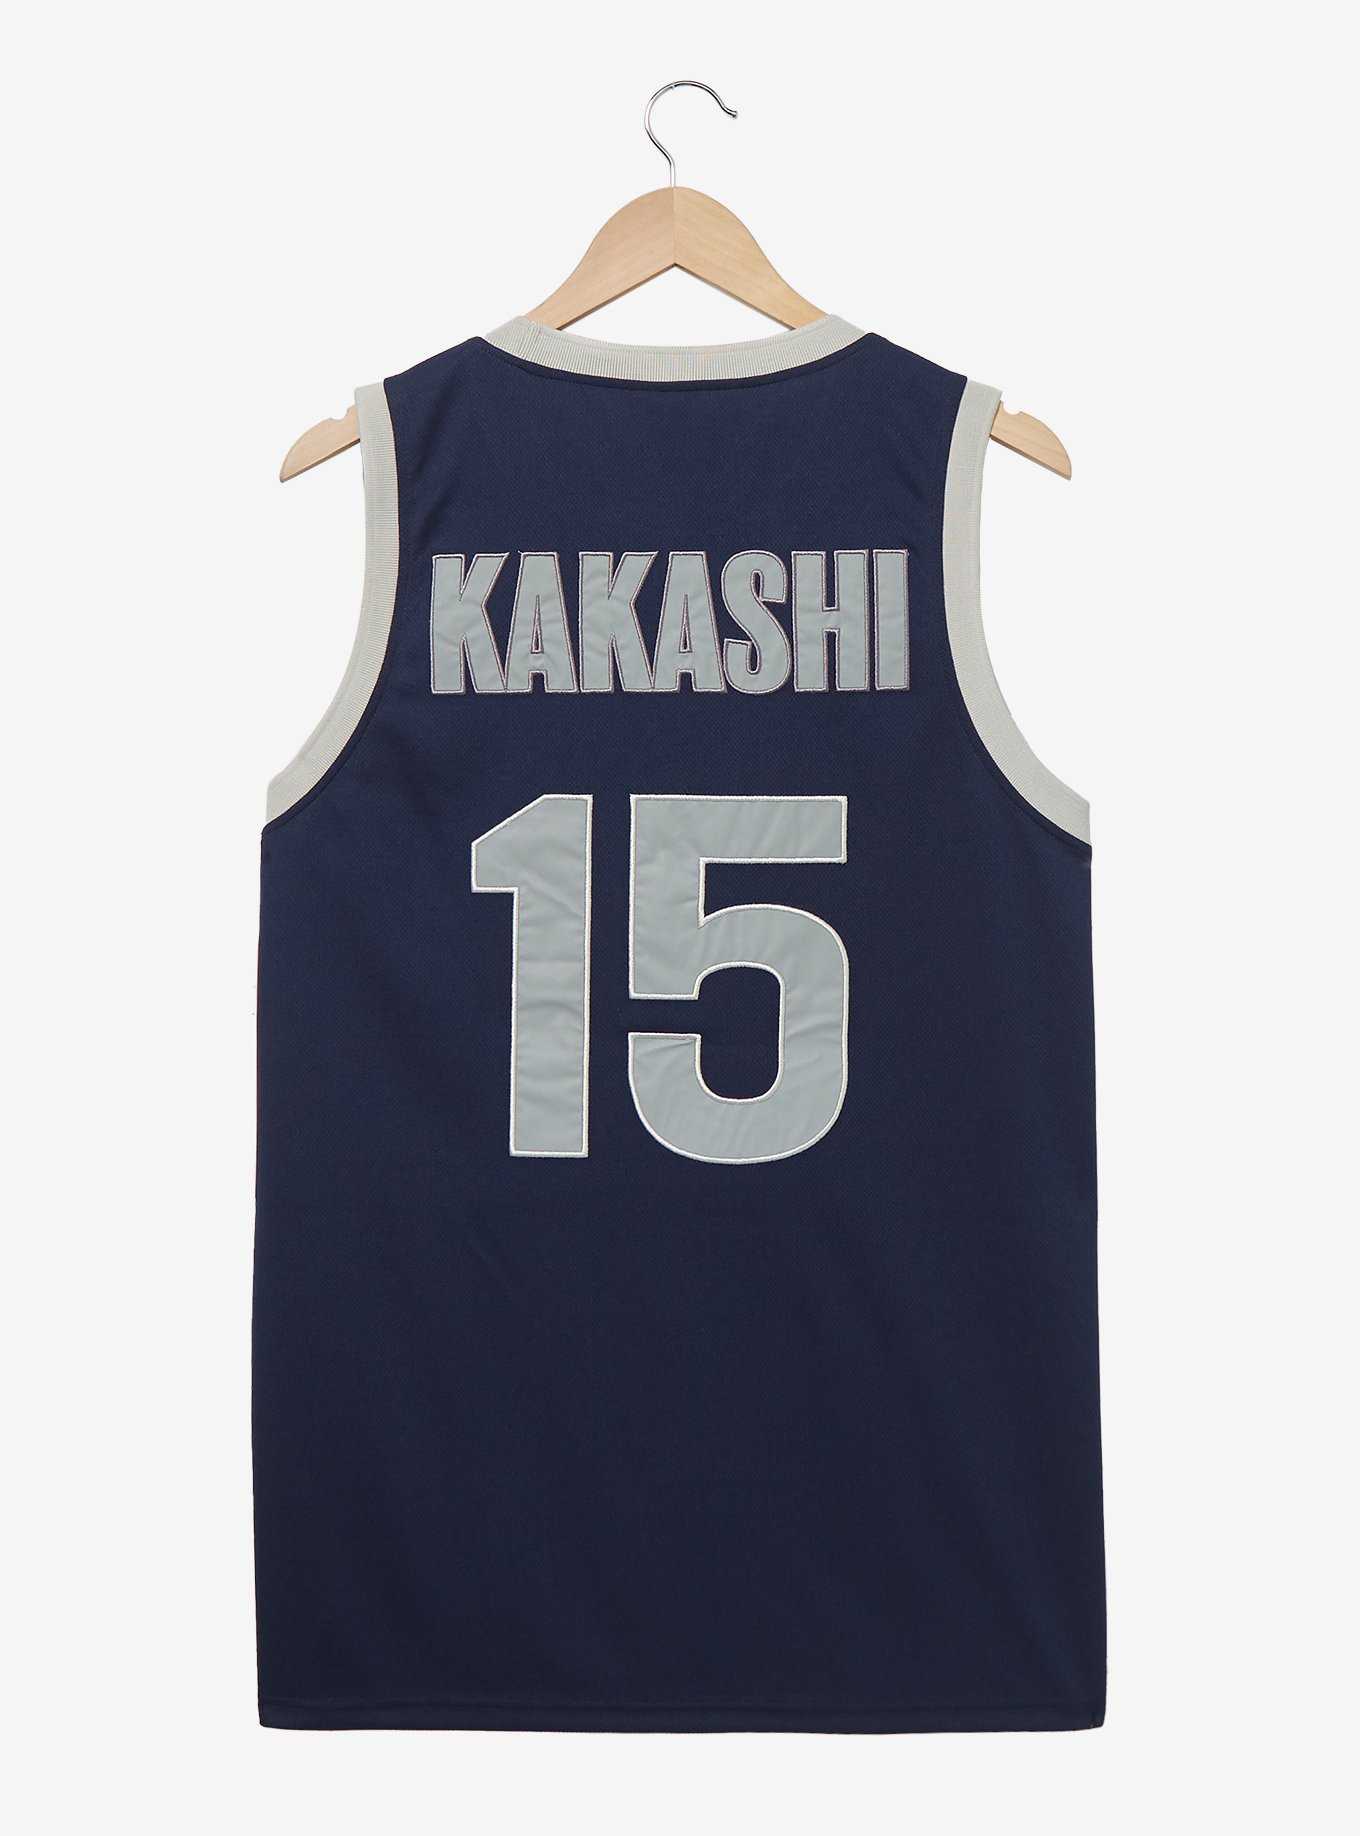 Naruto Shippuden Kakashi Hatake Anbu Basketball Jersey - BoxLunch Exclusive, , hi-res